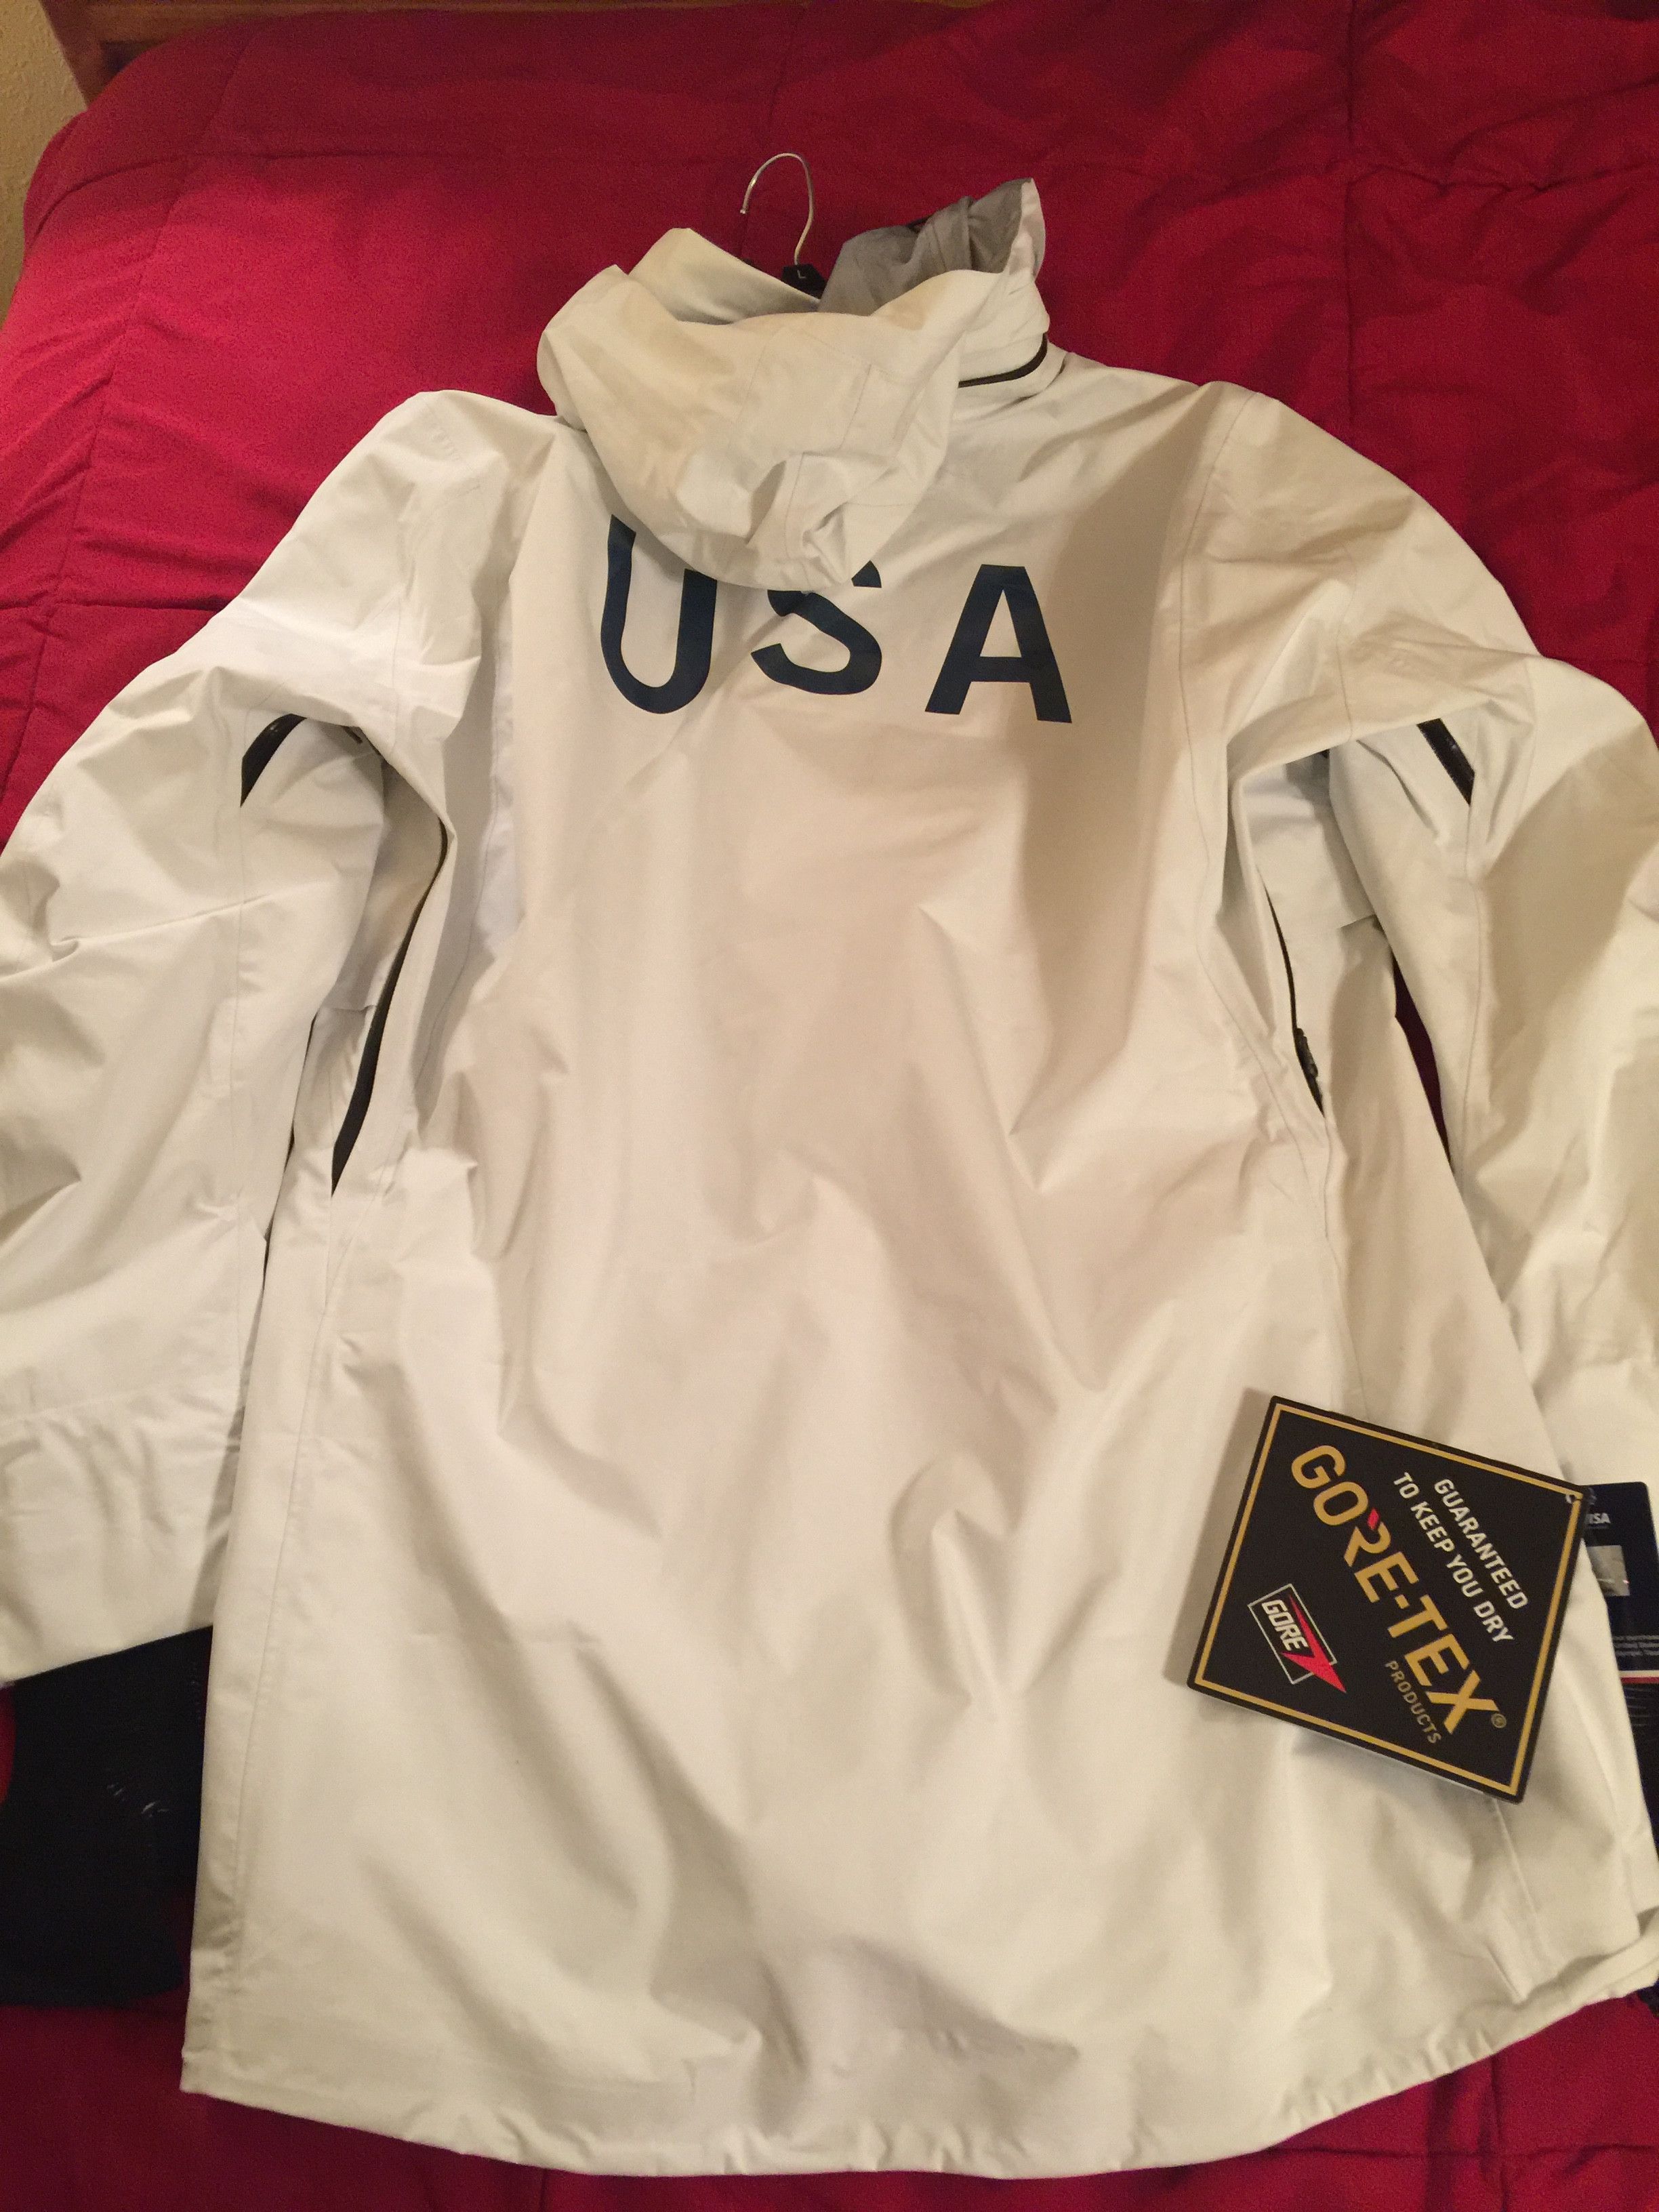 Nike Nike NikeLab Olympic Team USA Medal Stand White GoreTex Jacket Large New Size US L / EU 52-54 / 3 - 3 Thumbnail